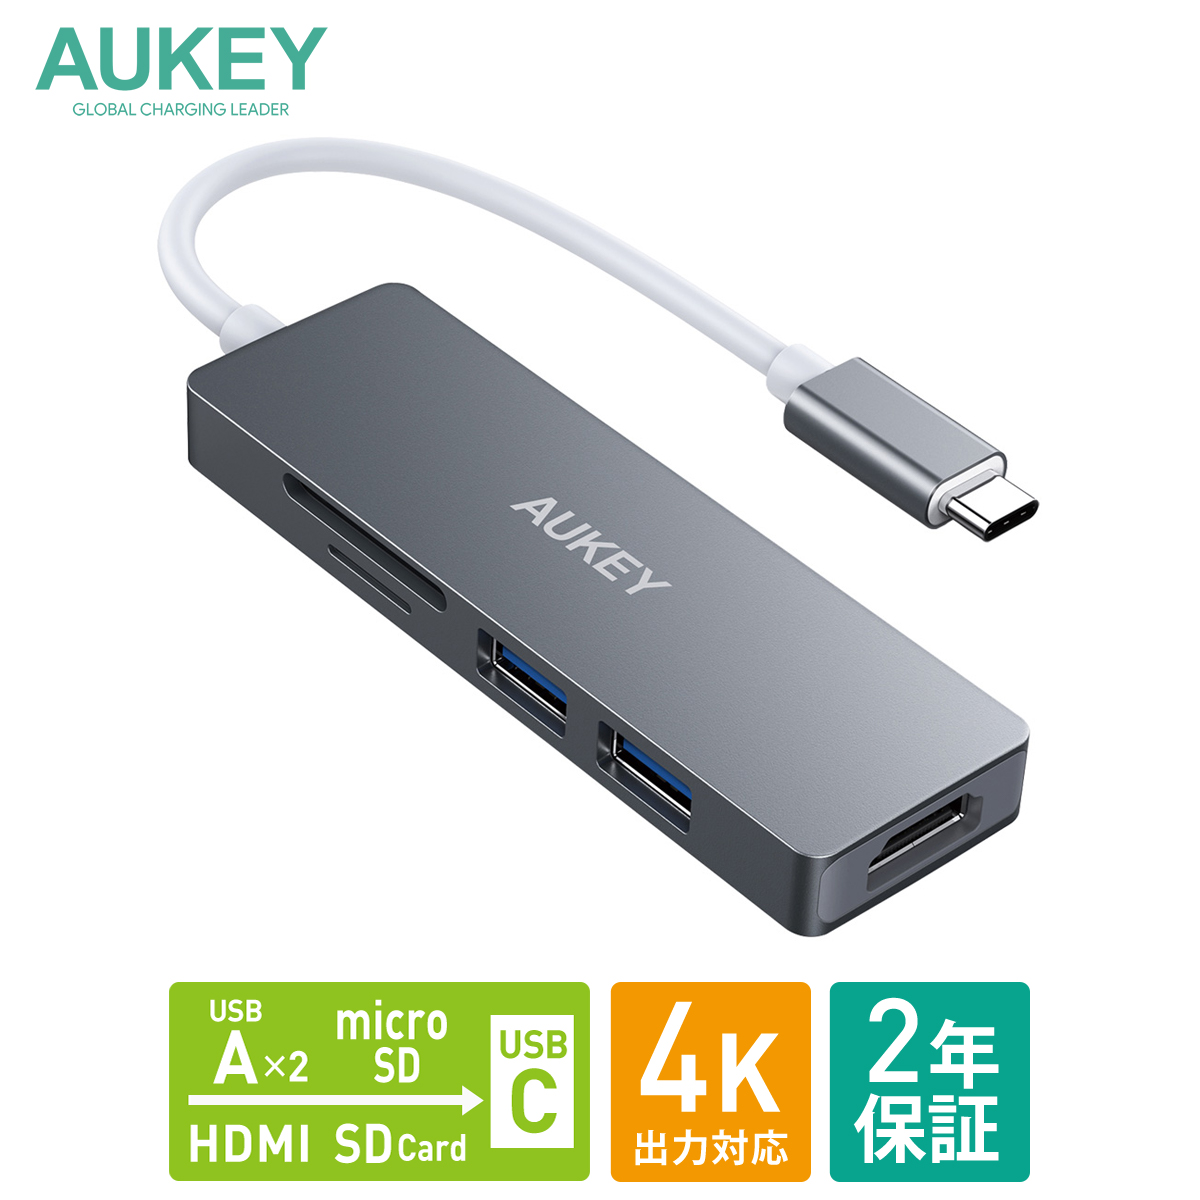 USBハブ タイプC HDMI microSD 予約販売 スリム 安い おしゃれ テレワーク 在宅勤務 4K 5Gbps USB3.0 type-c AUKEY SDカード オーキー データ転送 2年保証 グレー 4K出力対応 Macbook Unity CB-C72-GY ノートパソコン 150mm Slim 5-in-1